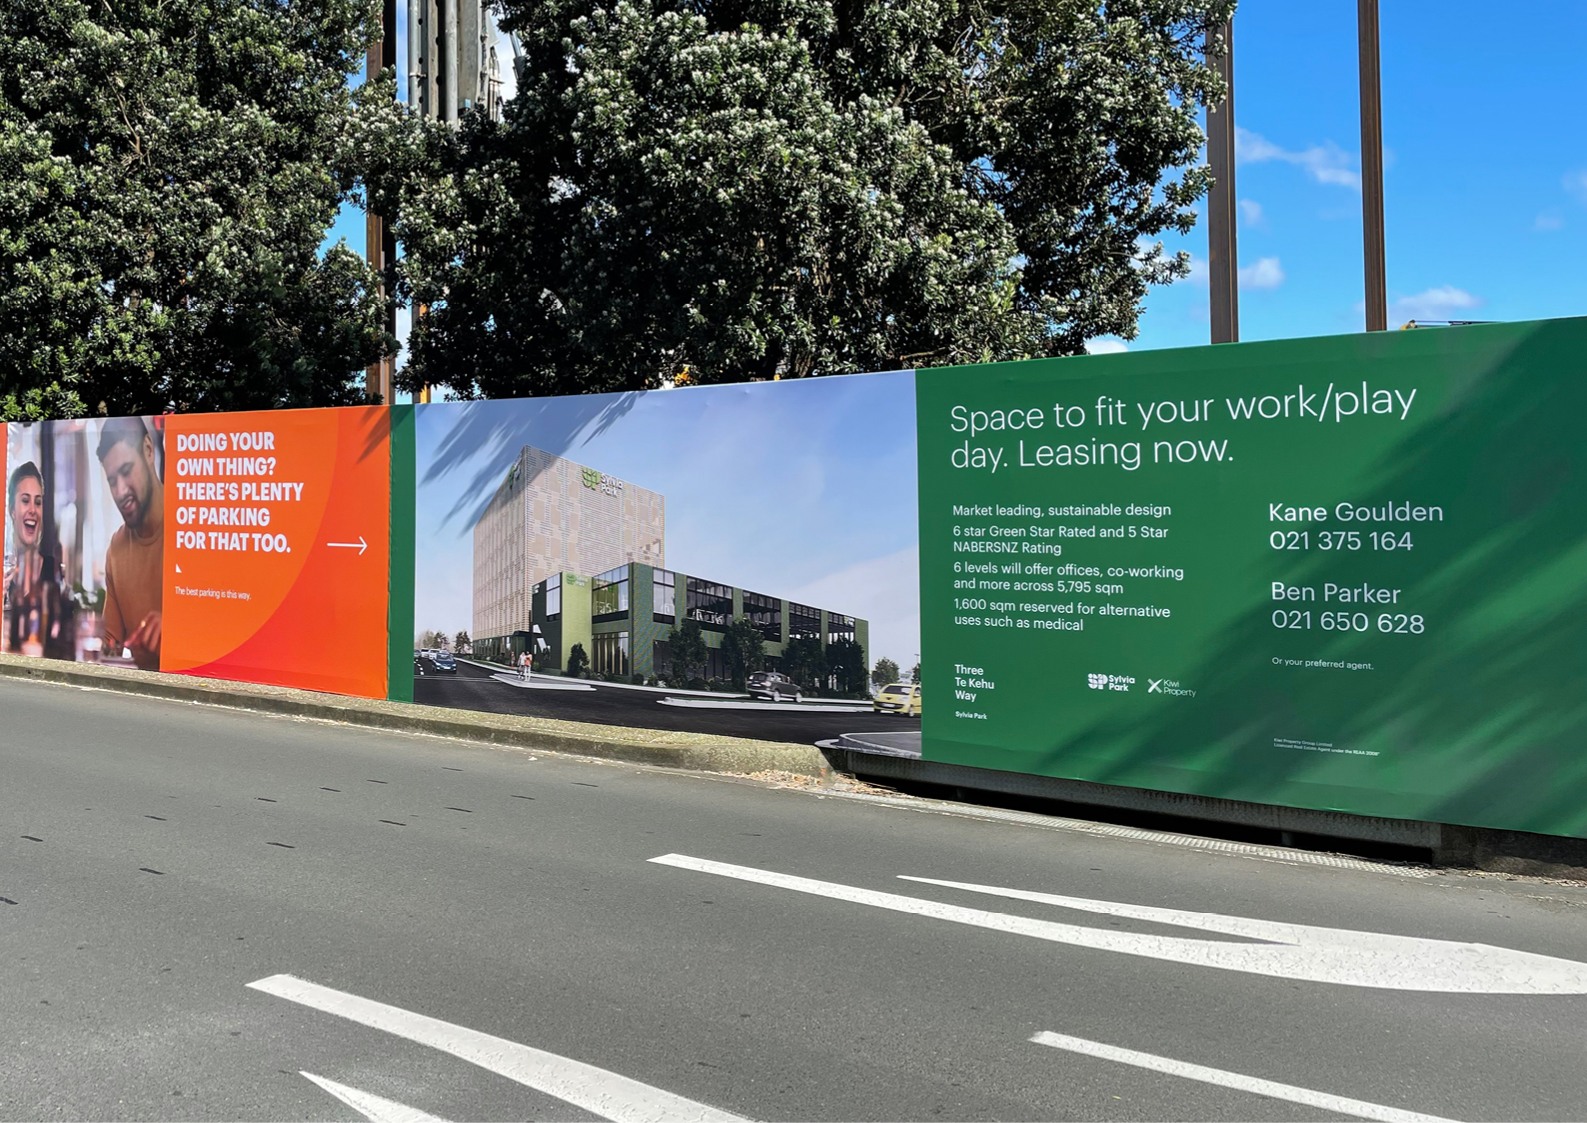 3 Te Kehu Way Commercial Property Development Hoarding and Parking messaging